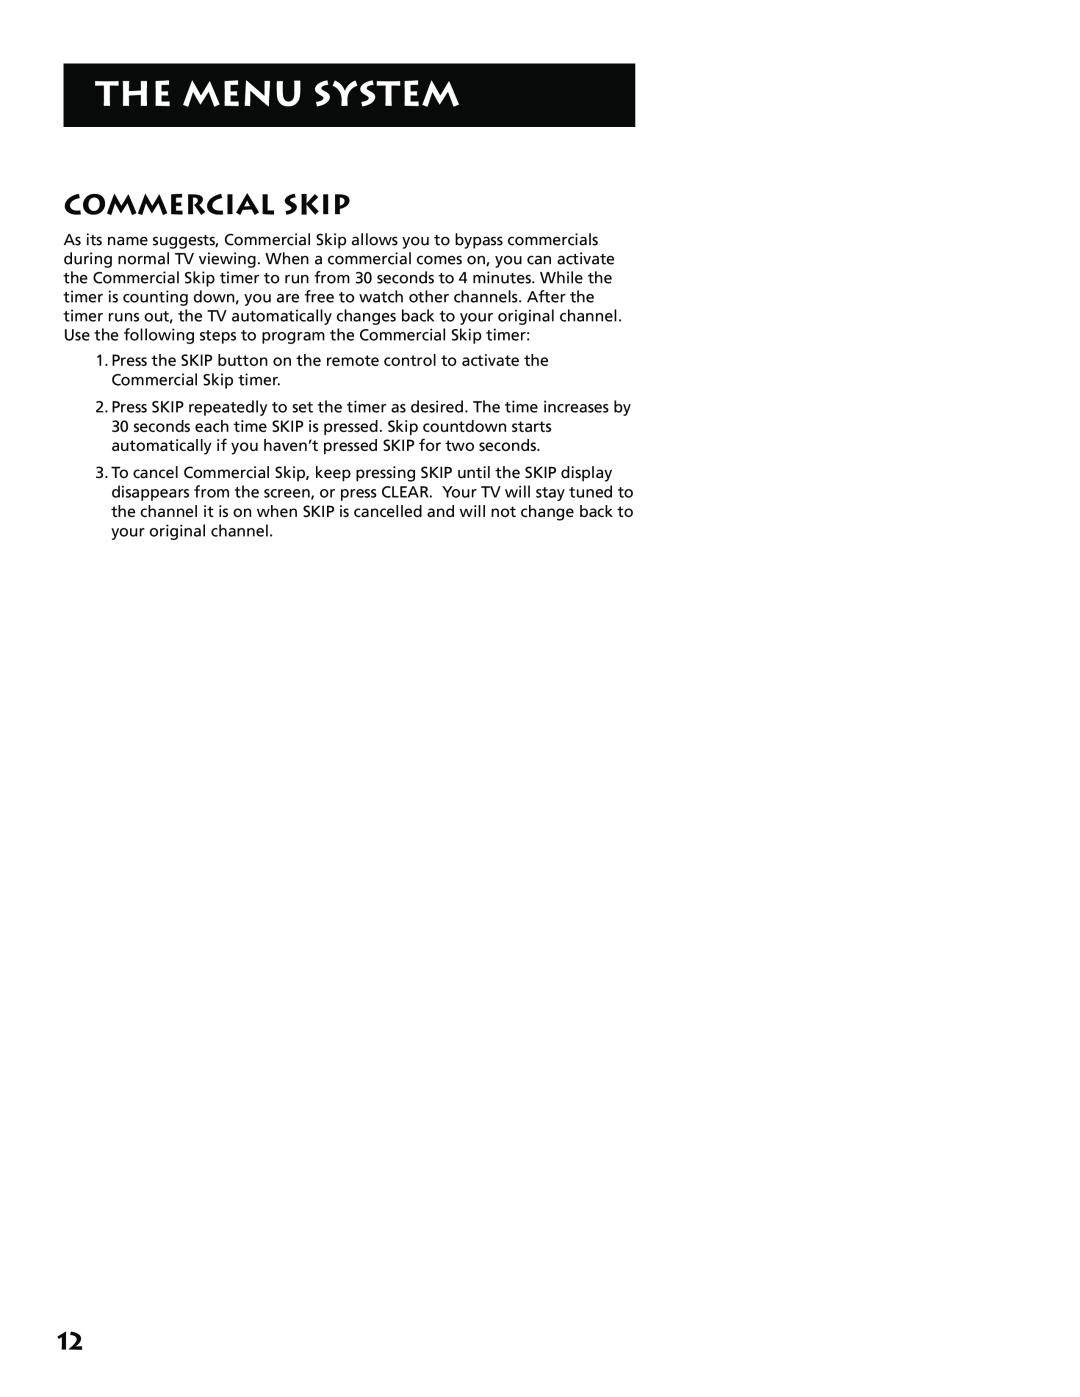 RCA E13341 manual Commercial Skip, The Menu System 